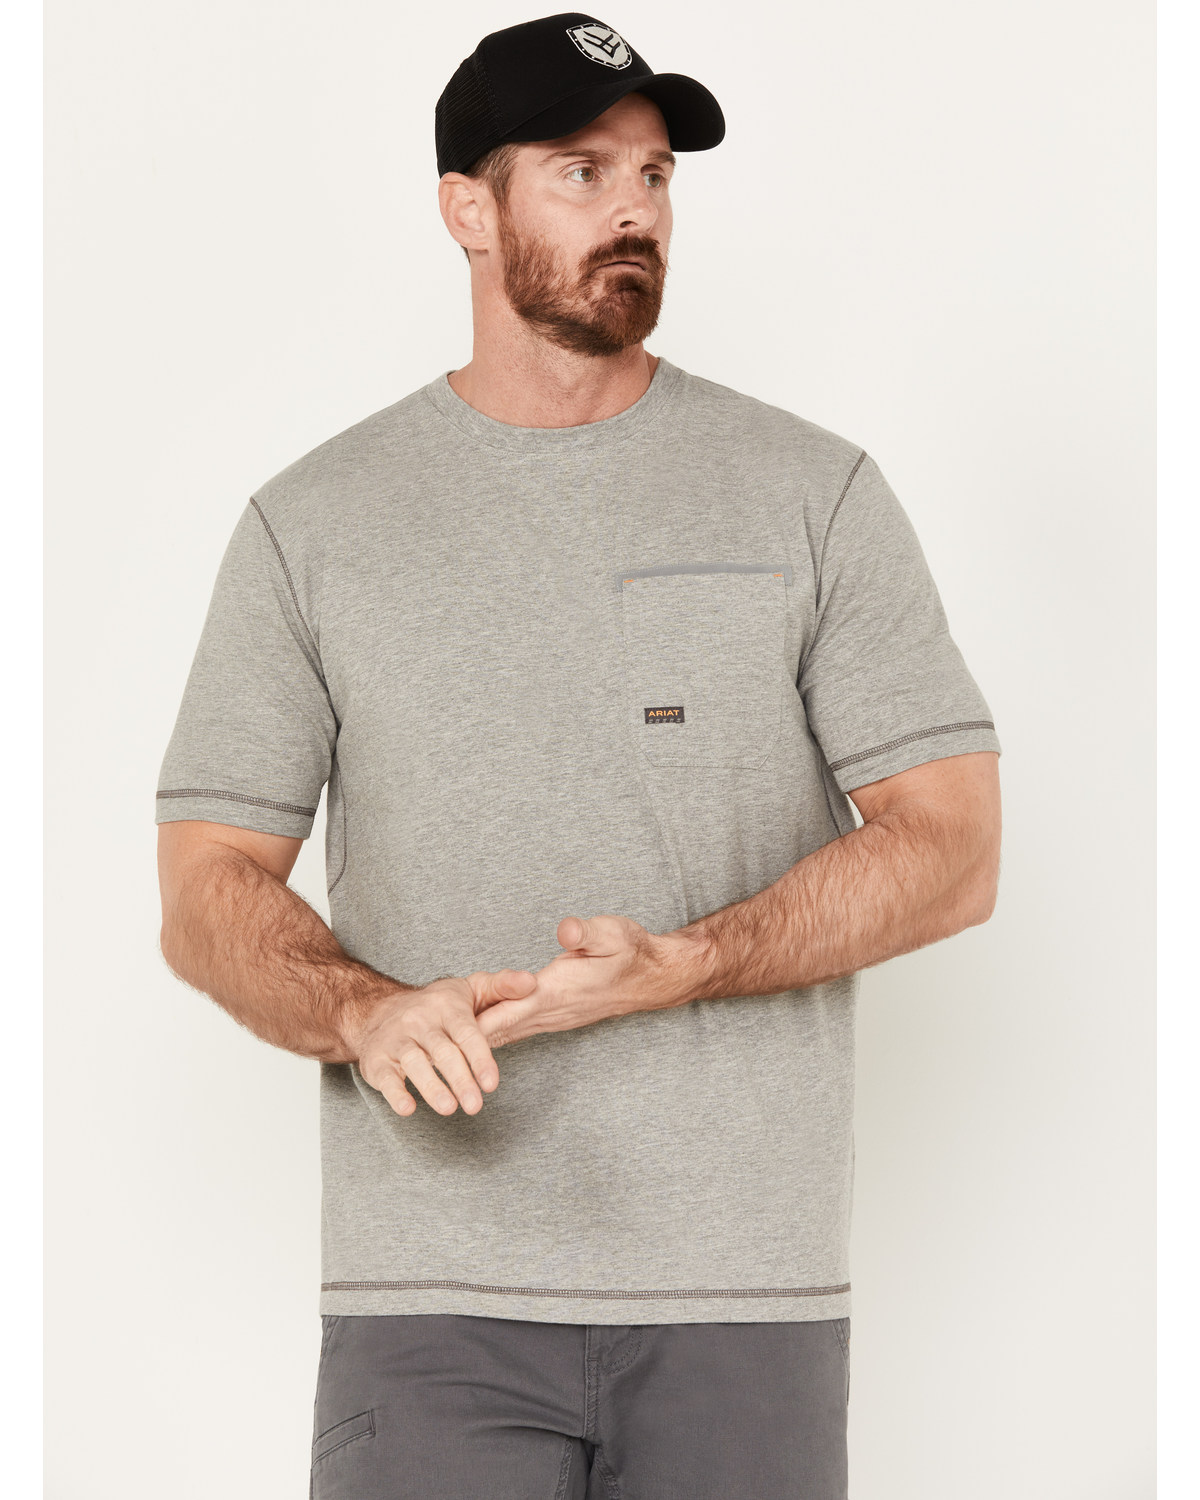 Ariat Men's Rebar Workman Reflective Flag Short Sleeve T-Shirt